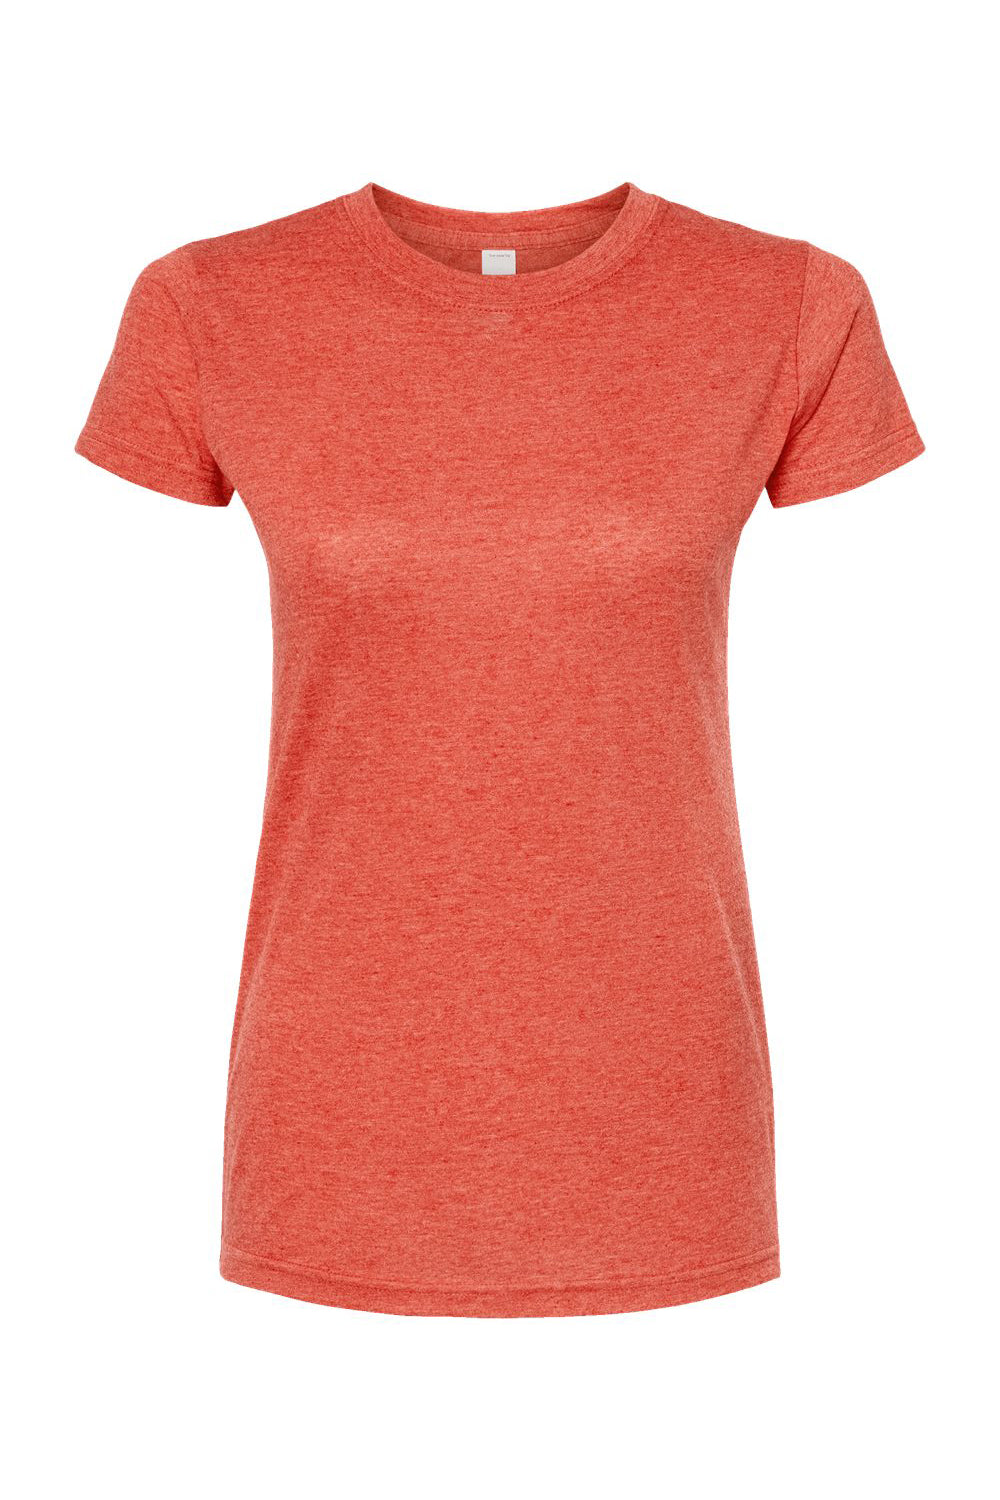 Tultex 240 Womens Poly-Rich Short Sleeve Crewneck T-Shirt Heather Orange Flat Front